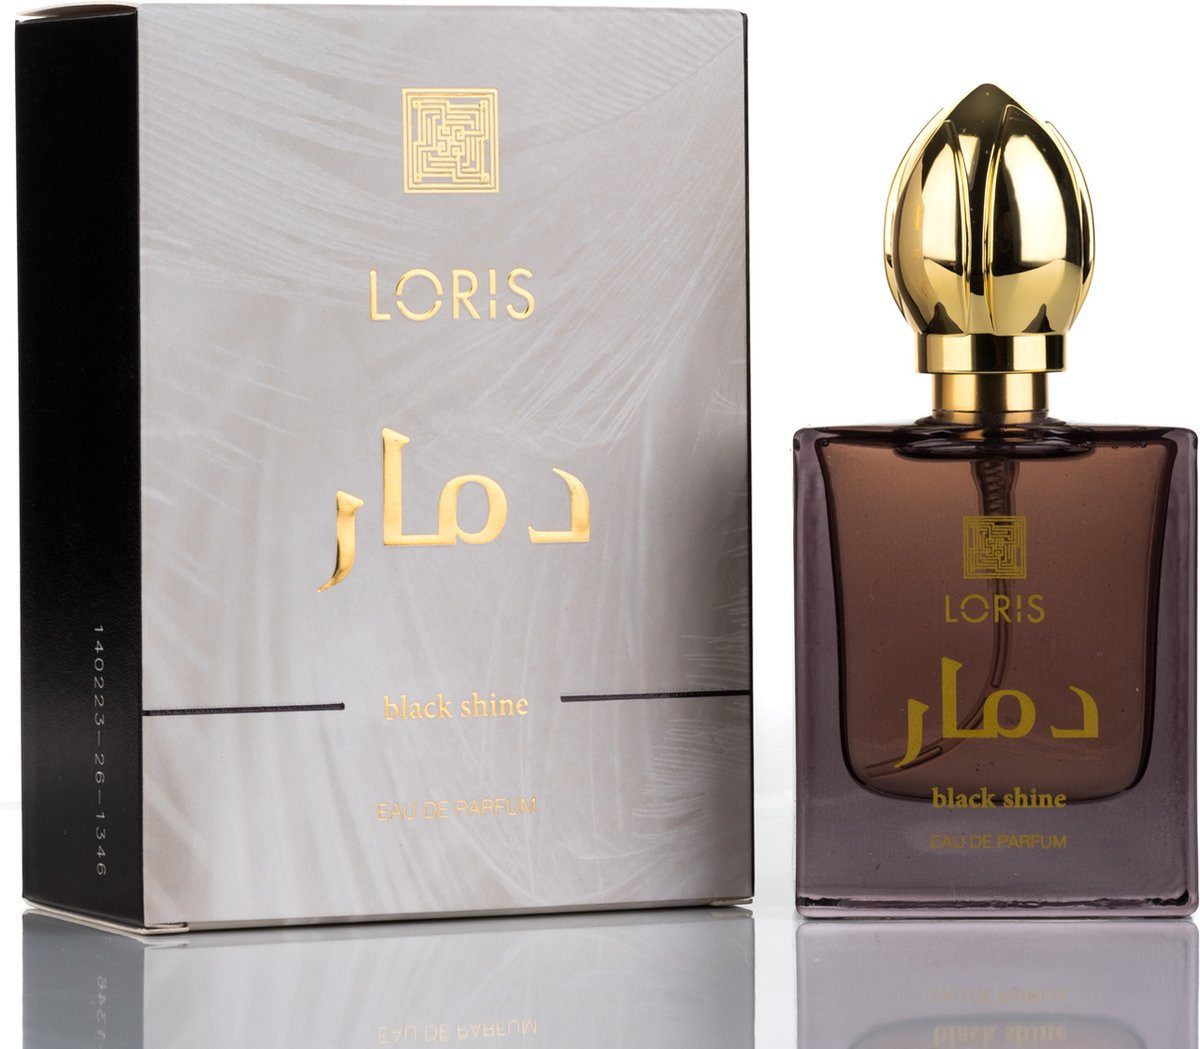 Loris Parfum Eau de Parfum Loris "black shine" Eau de Parfum Spray 50 ml